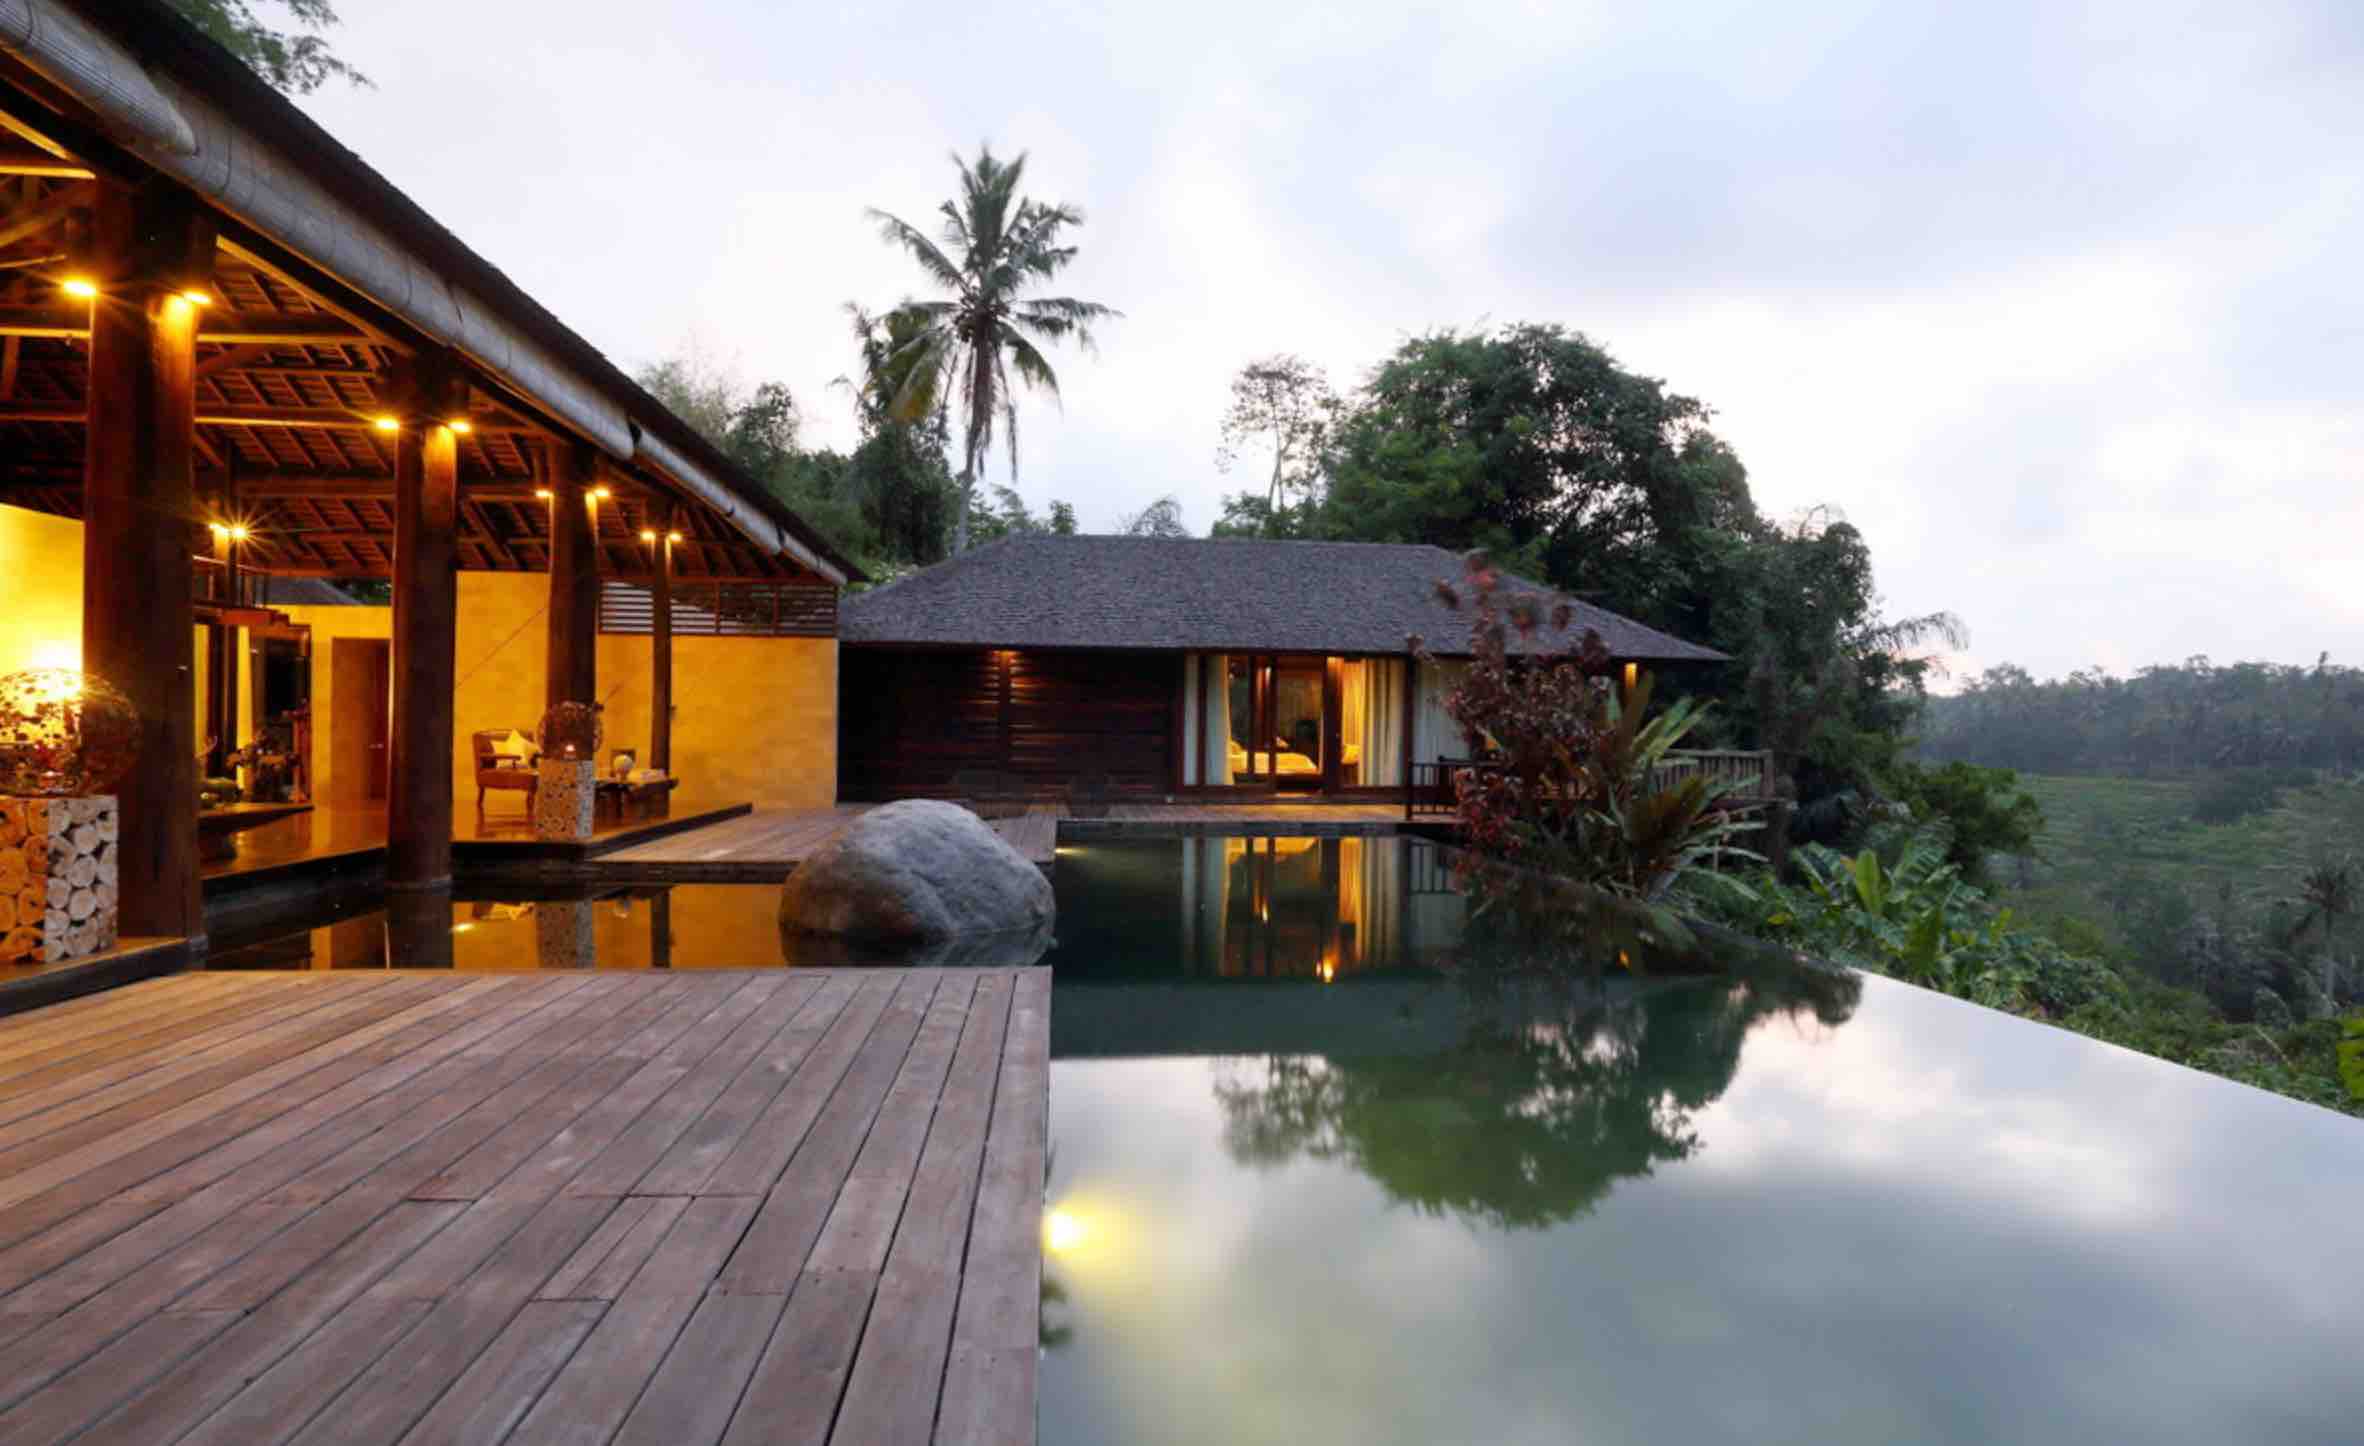 Villa Kamaniiya, - where to stay in ubud, bali